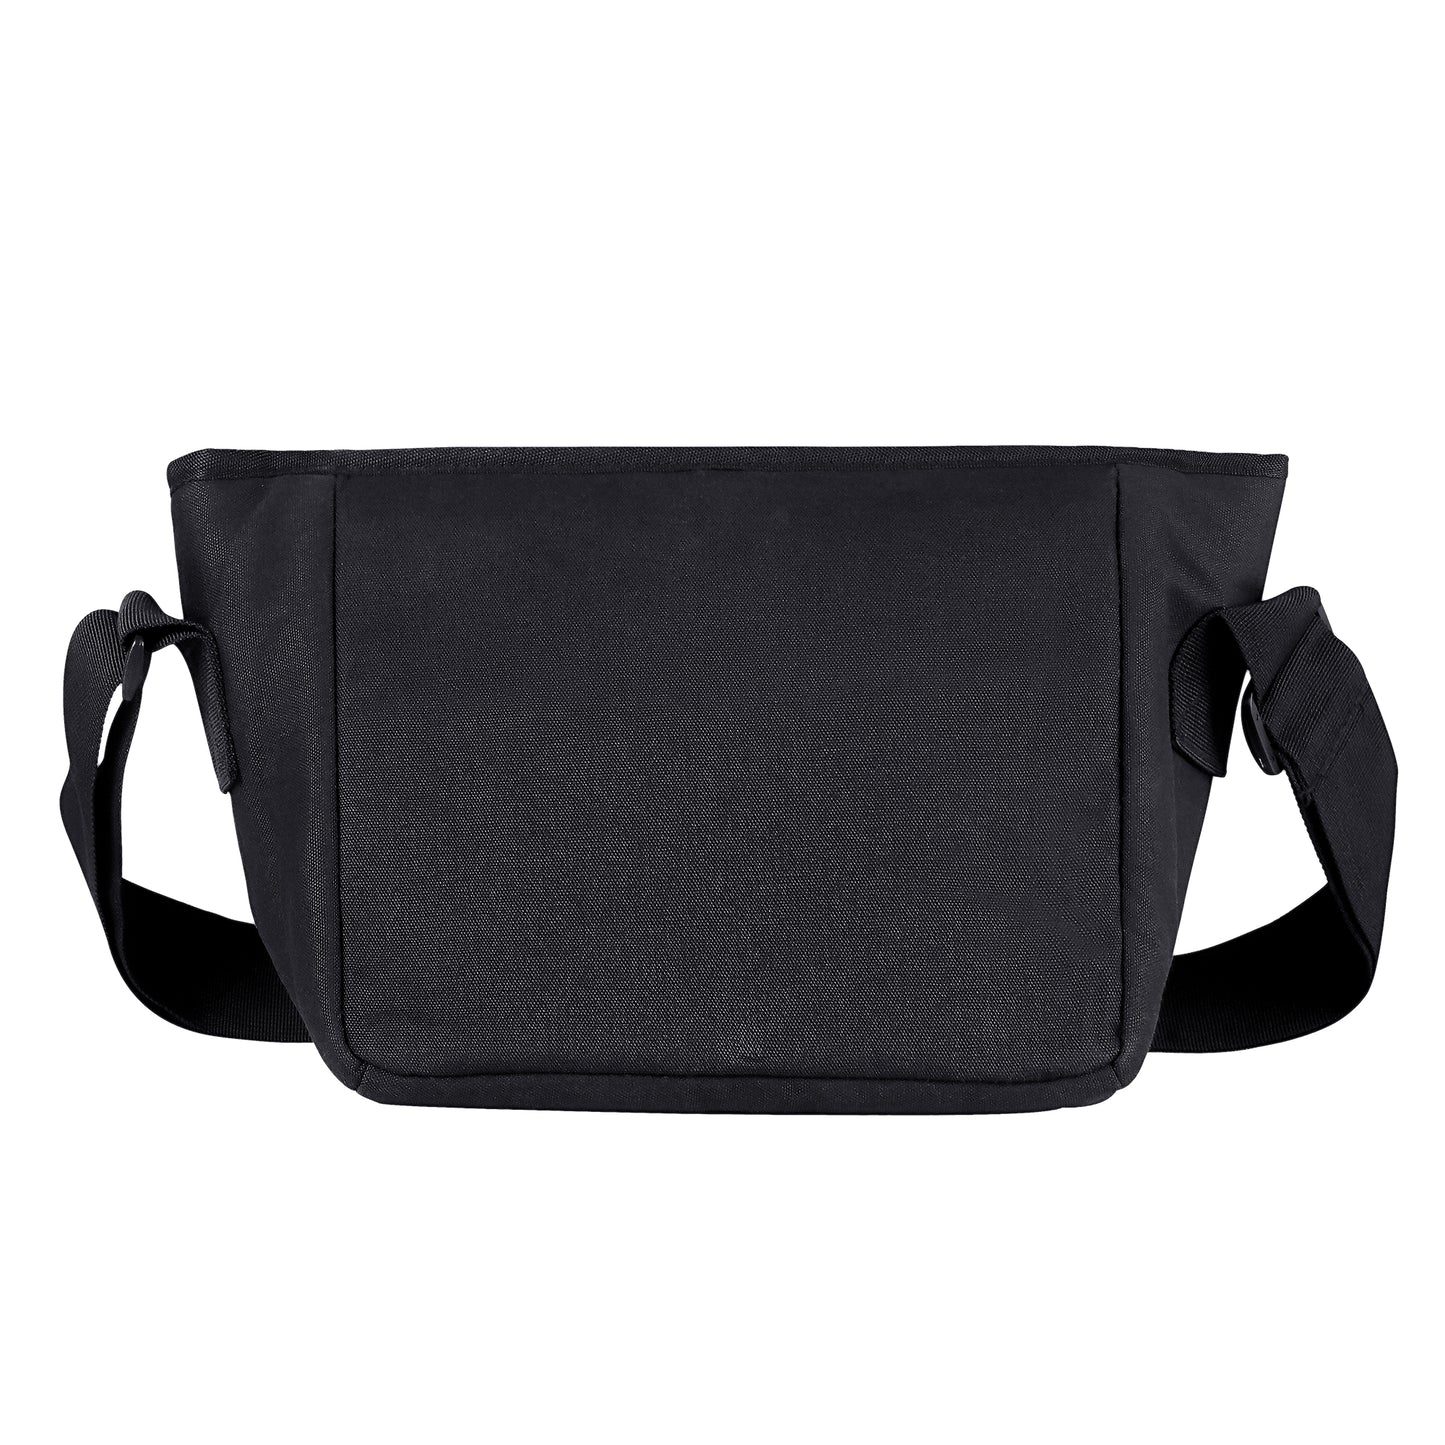 Mauri Inspired - Messenger Bag